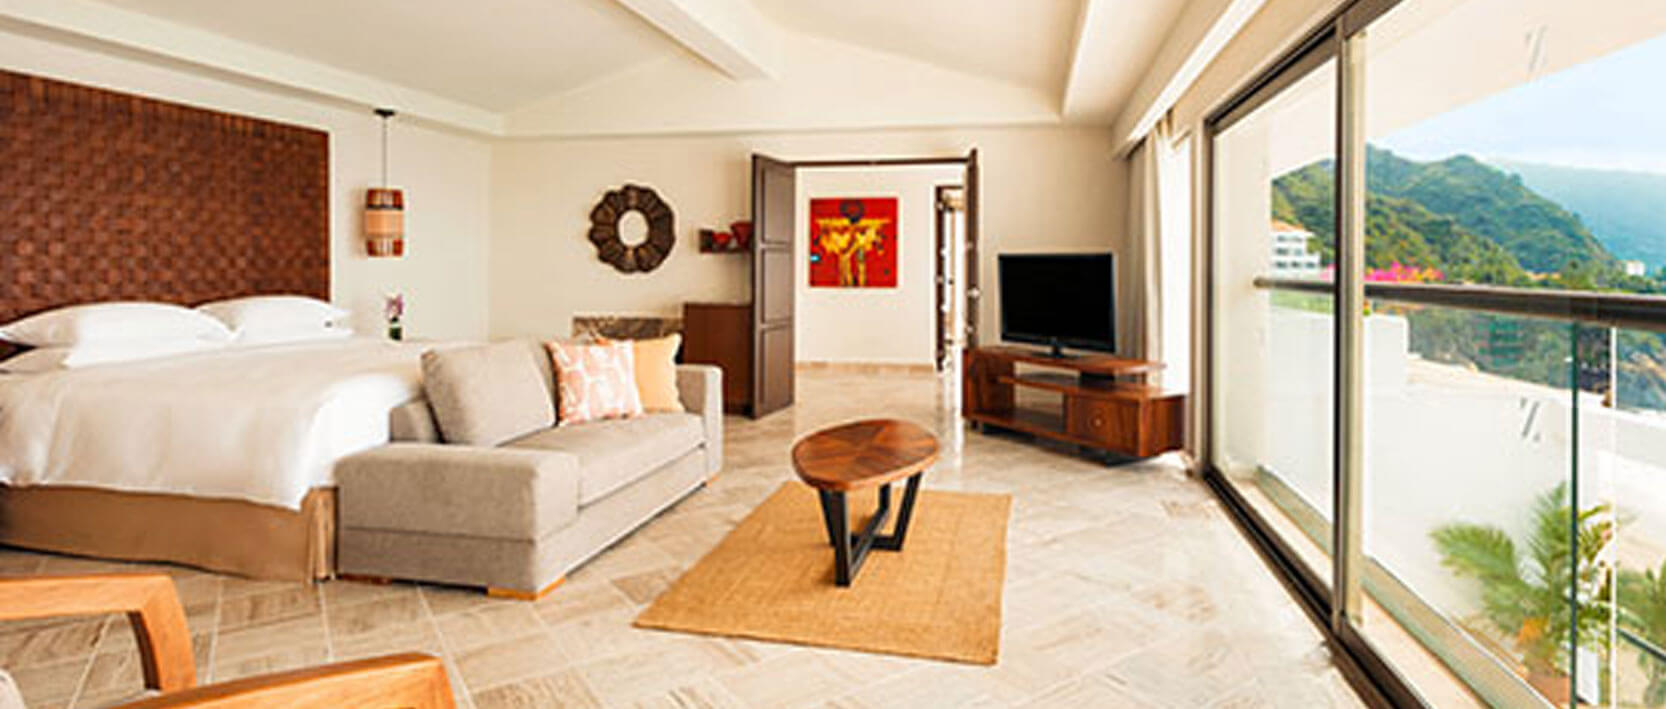 Hyatt Ziva Puerto Vallarta Accommodations - One Bedroom Plunge Pool Suite King